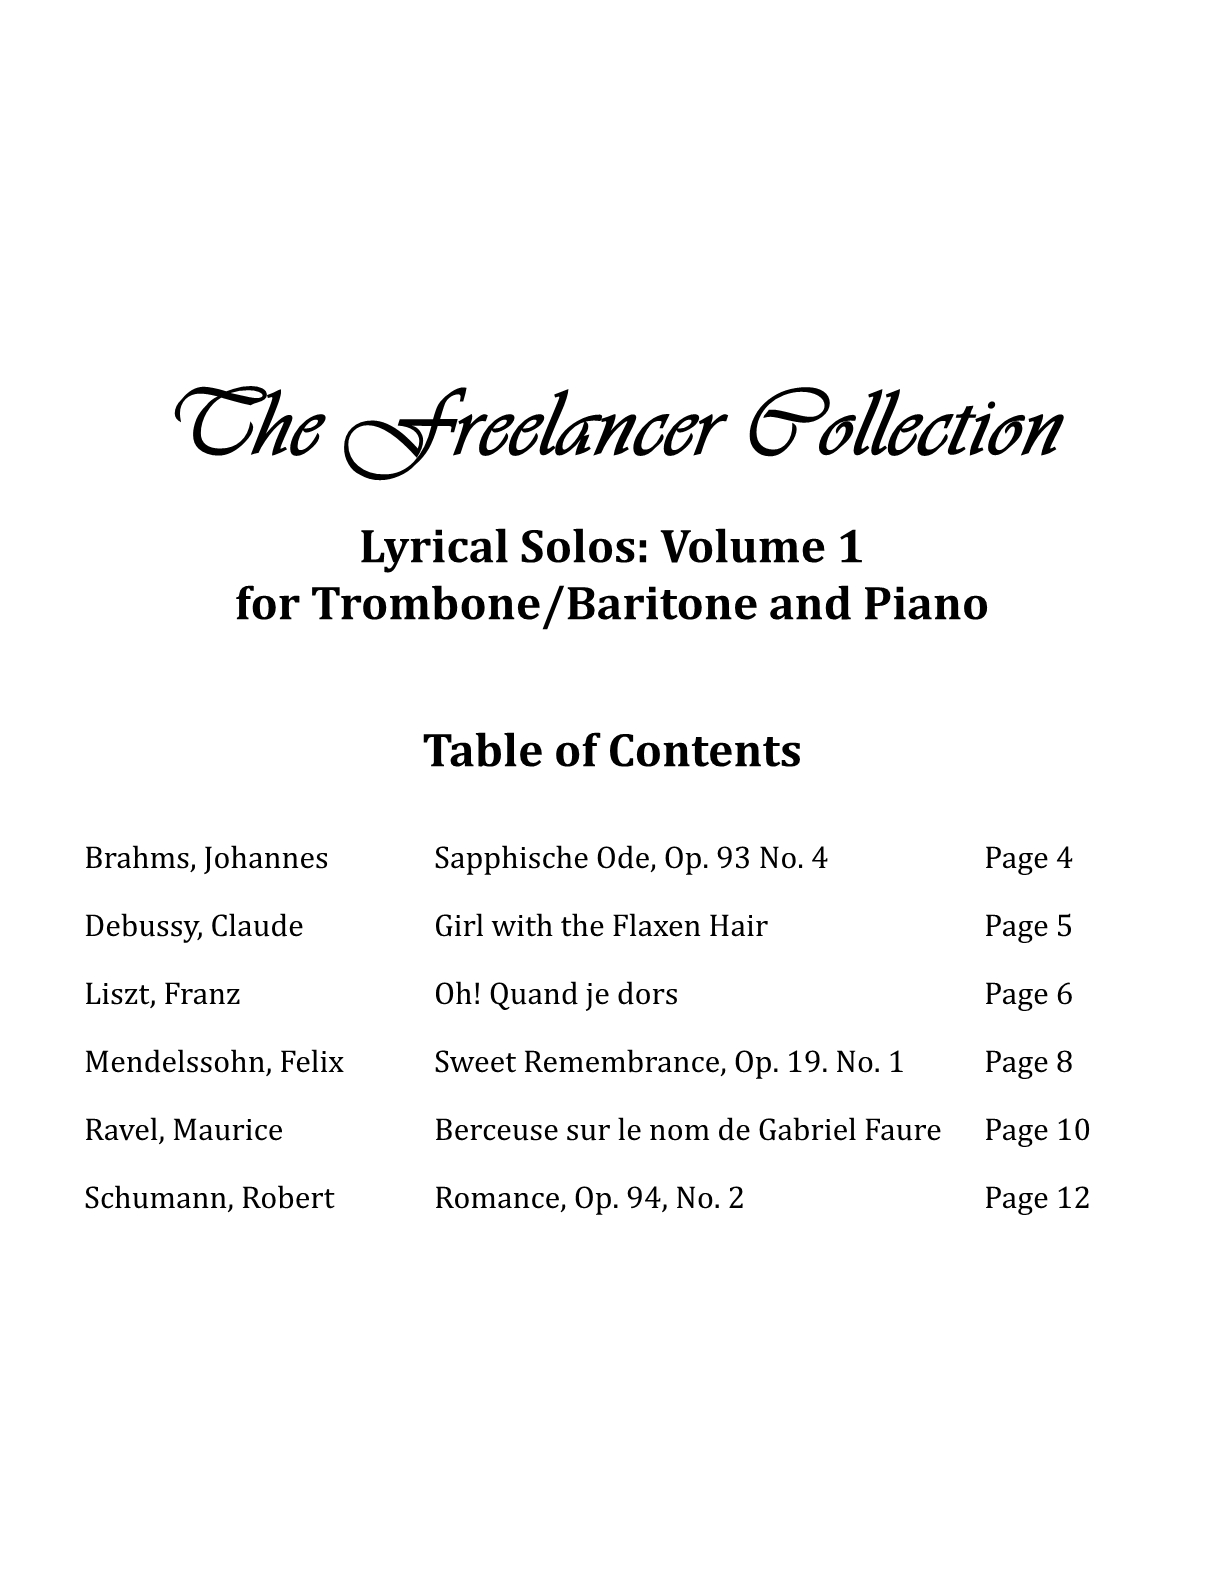 Hepler - Freelancer Collection Lyrical Solos Vol 1 (Trb & Piano)